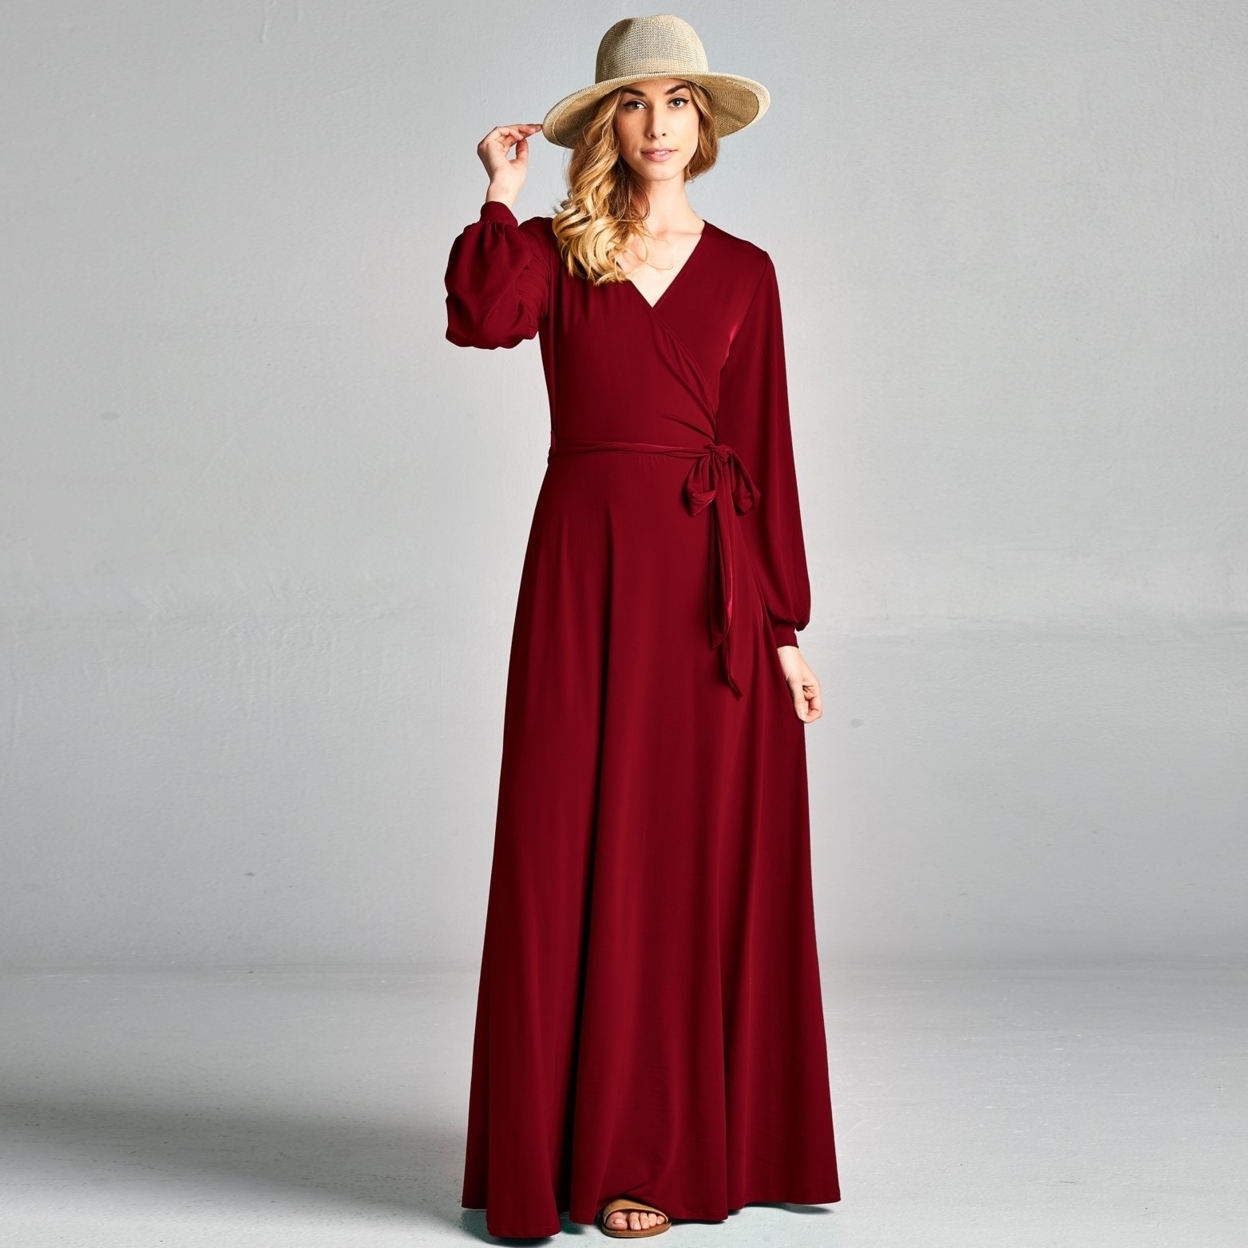 Cuffed Sleeve Venechia Wrap Dress - Burgundy, Medium (8-10)